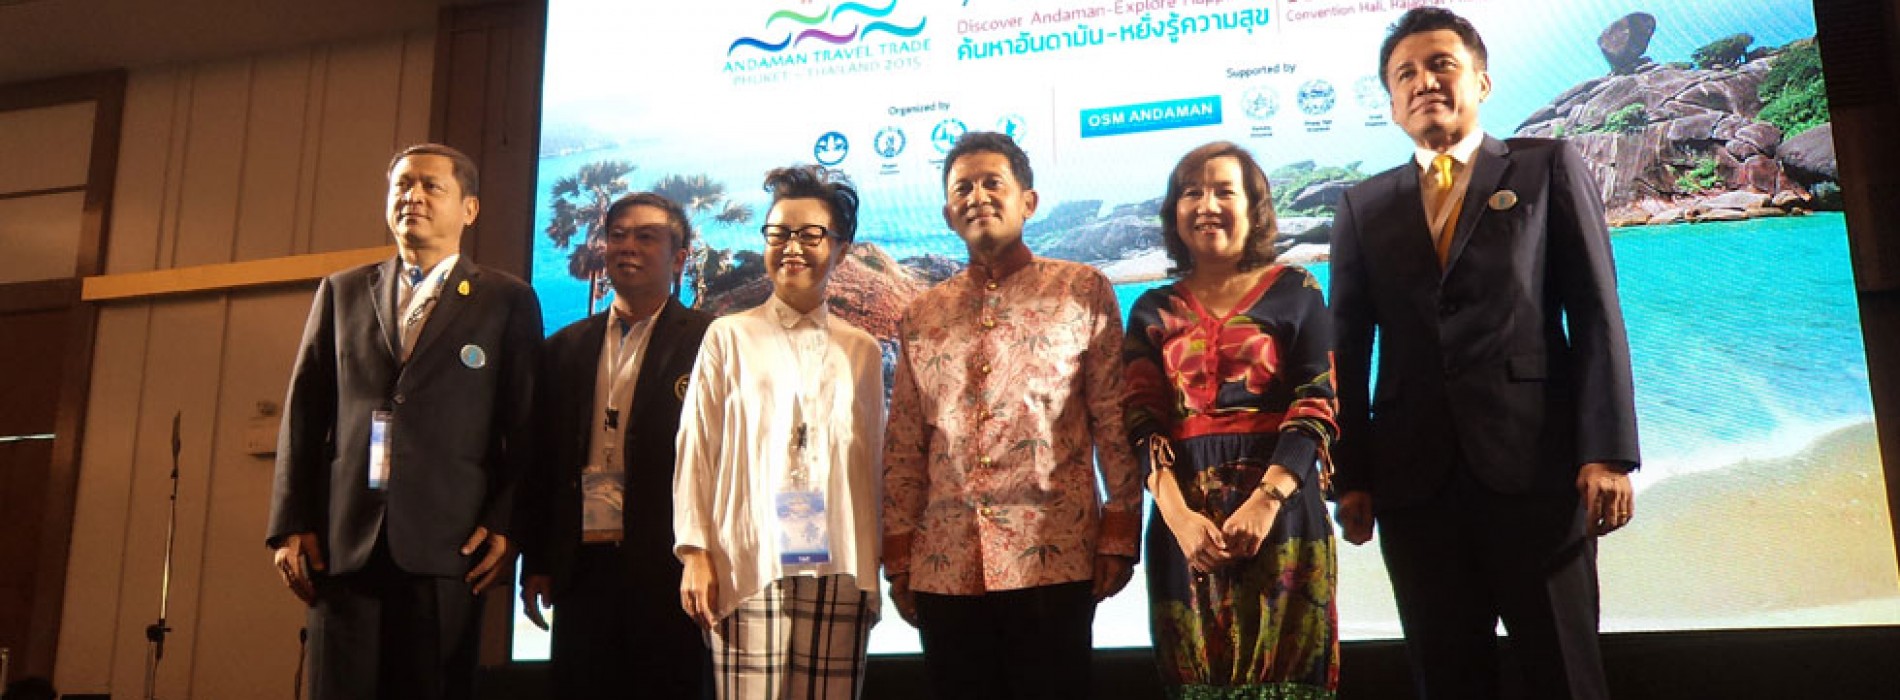 Thailand Tourism Organizes 7th Andaman Travel Trade 2015